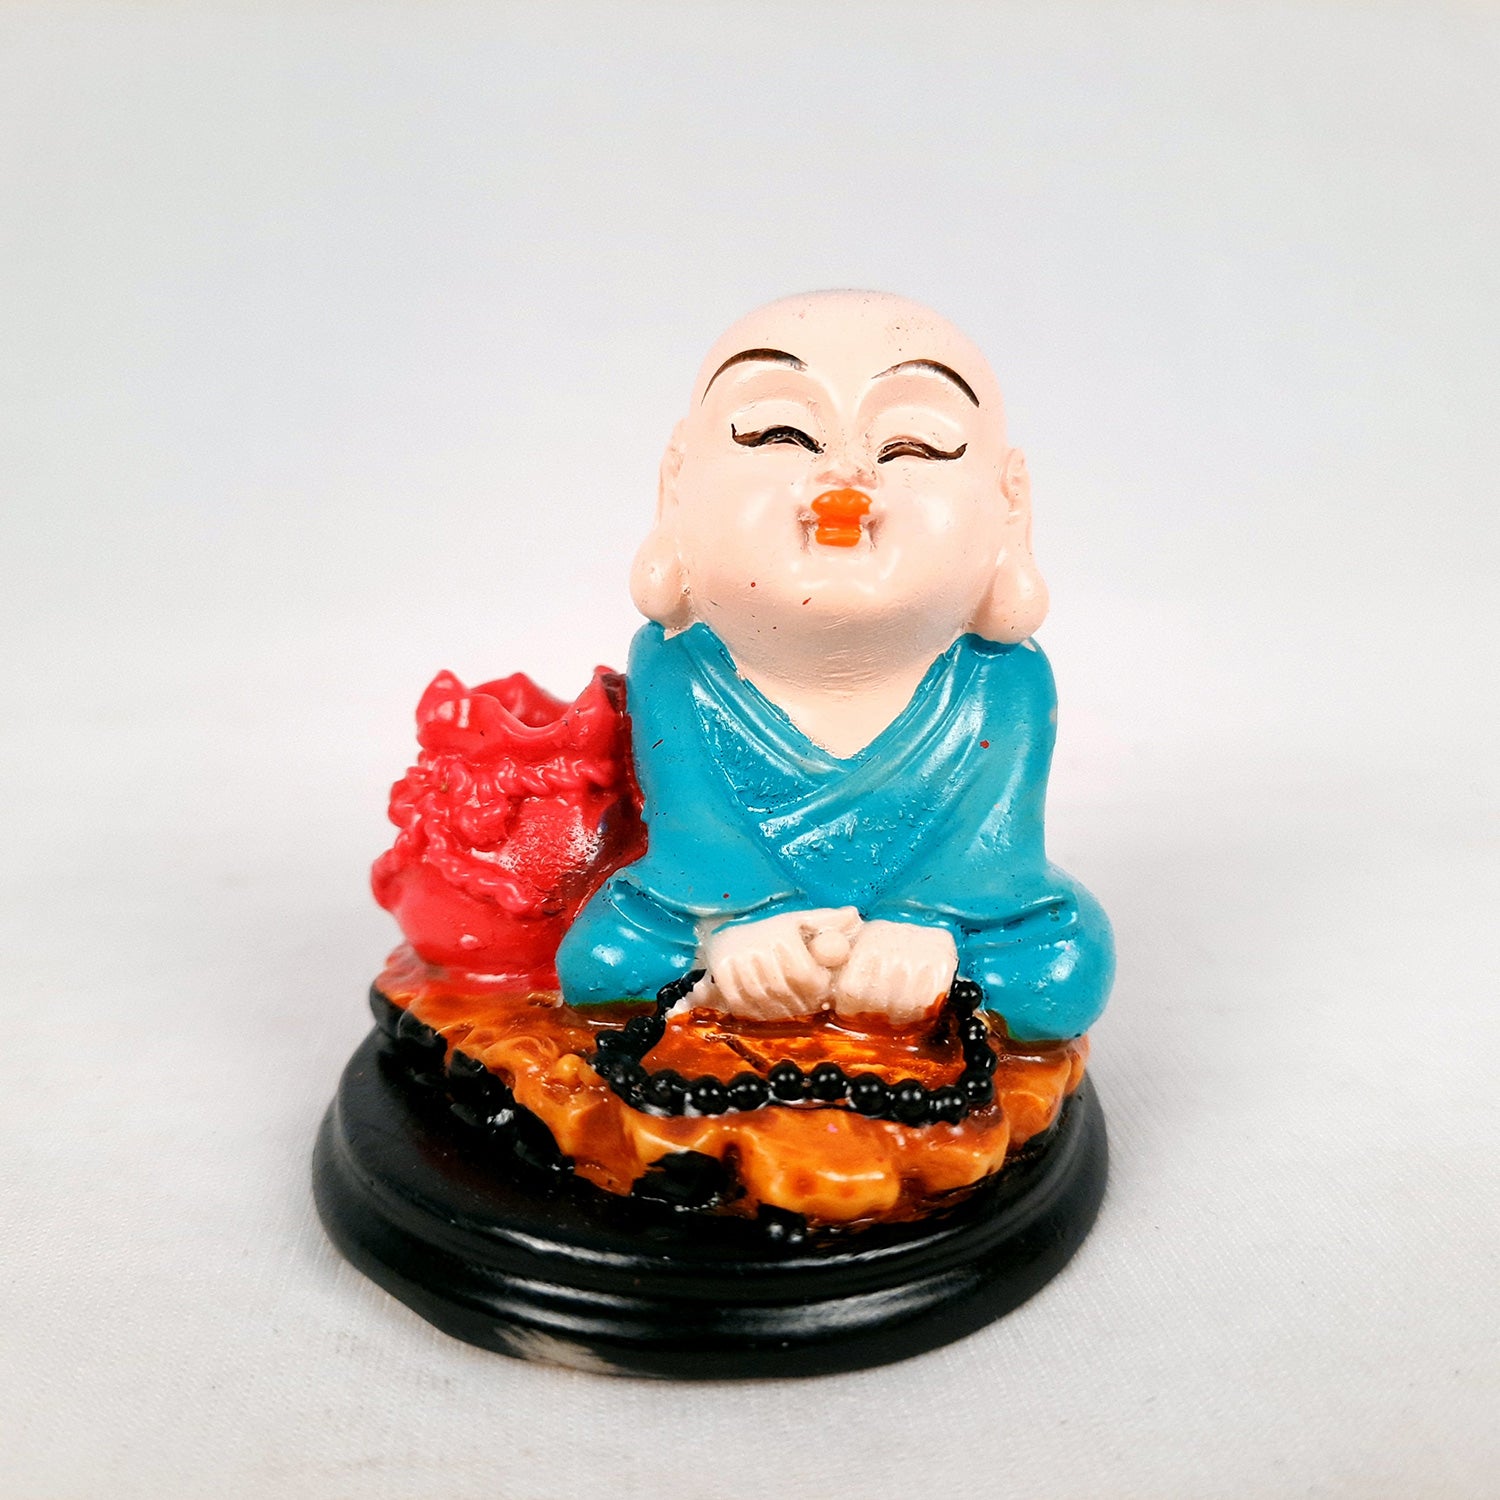 Buddha Baby Monk Showpiece | Feng Shui Decor - For Car Dashboard, Good Luck, Home, Table, Office Decor & Gift - 3 Inch (Set of 4) - Apkamart